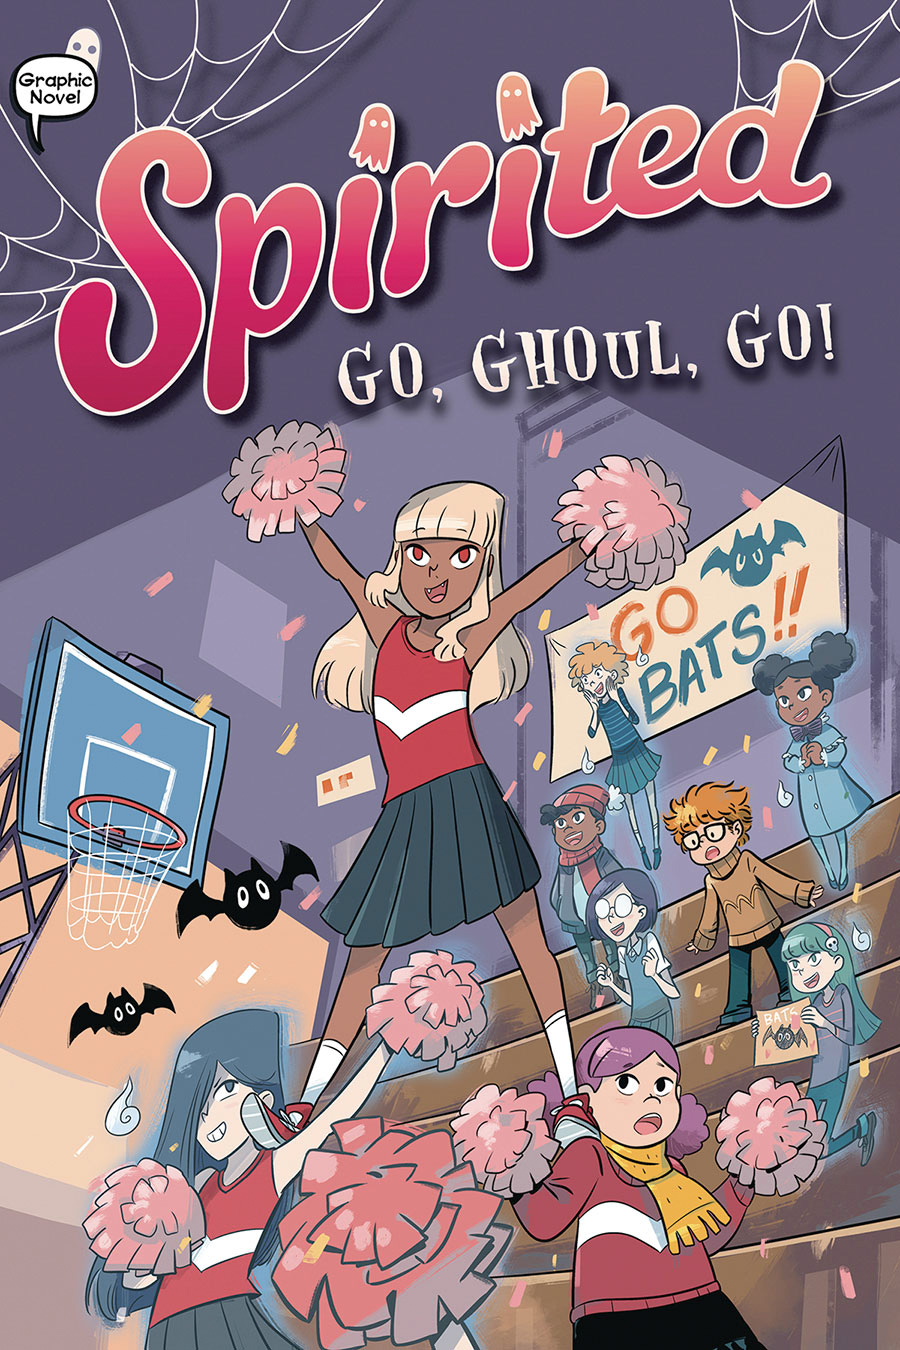 Spirited Vol 2 Go Ghoul Go TP